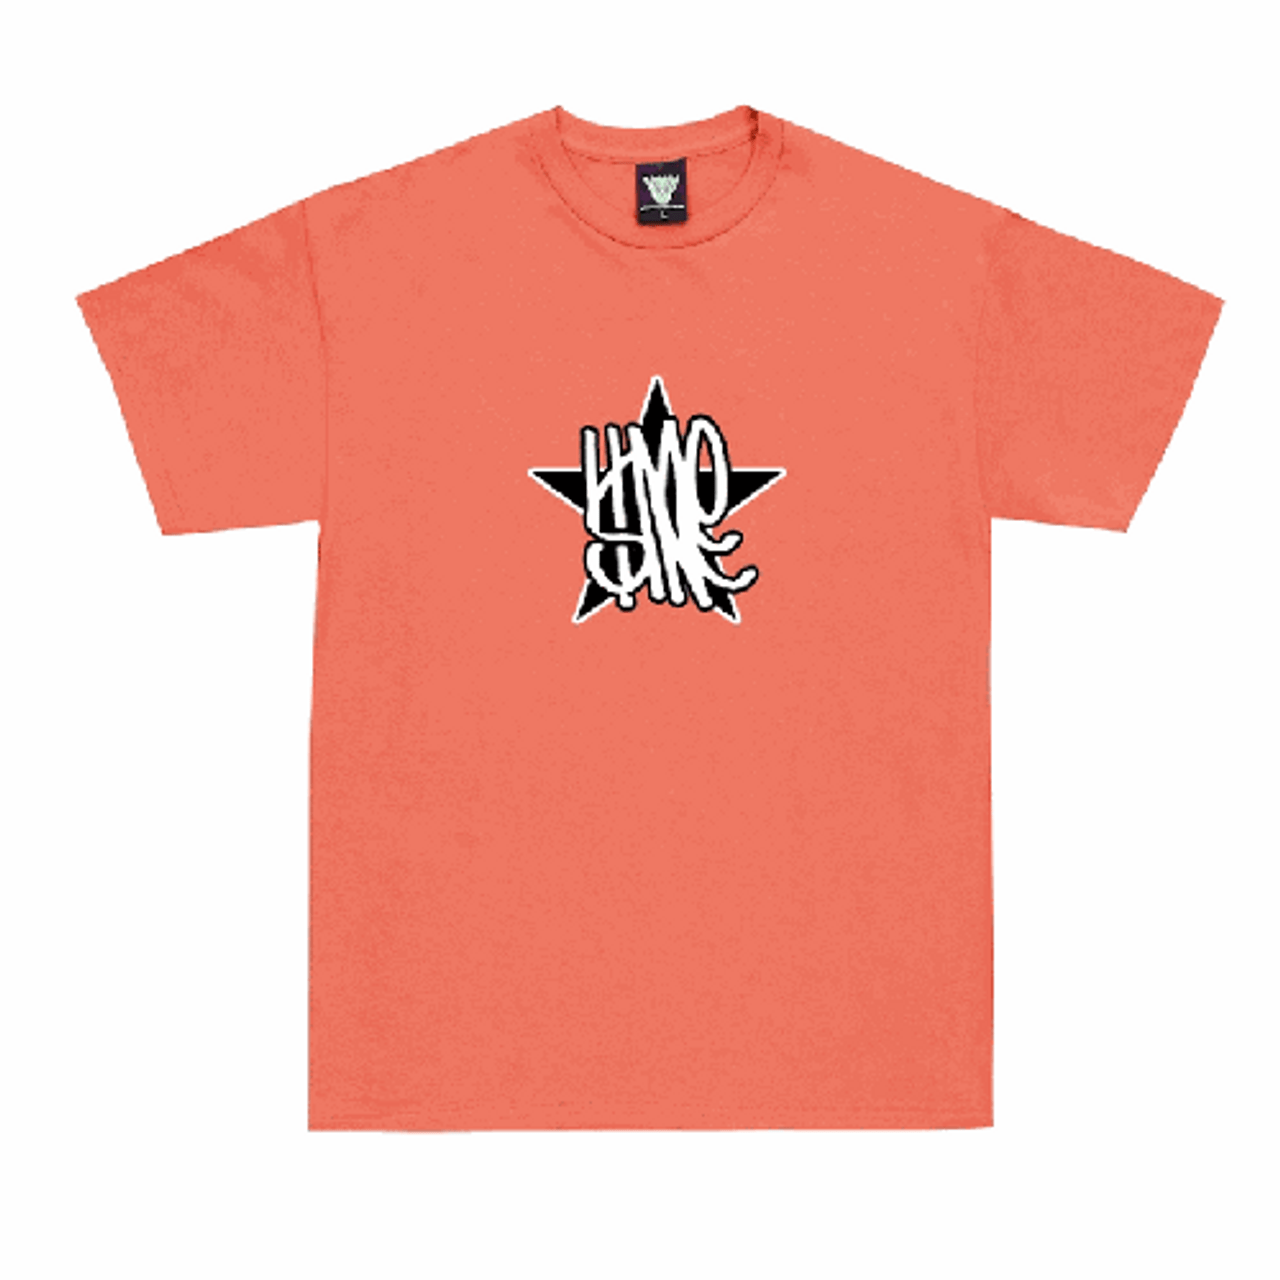 Limosine Star Orange Coral Tshirt XL